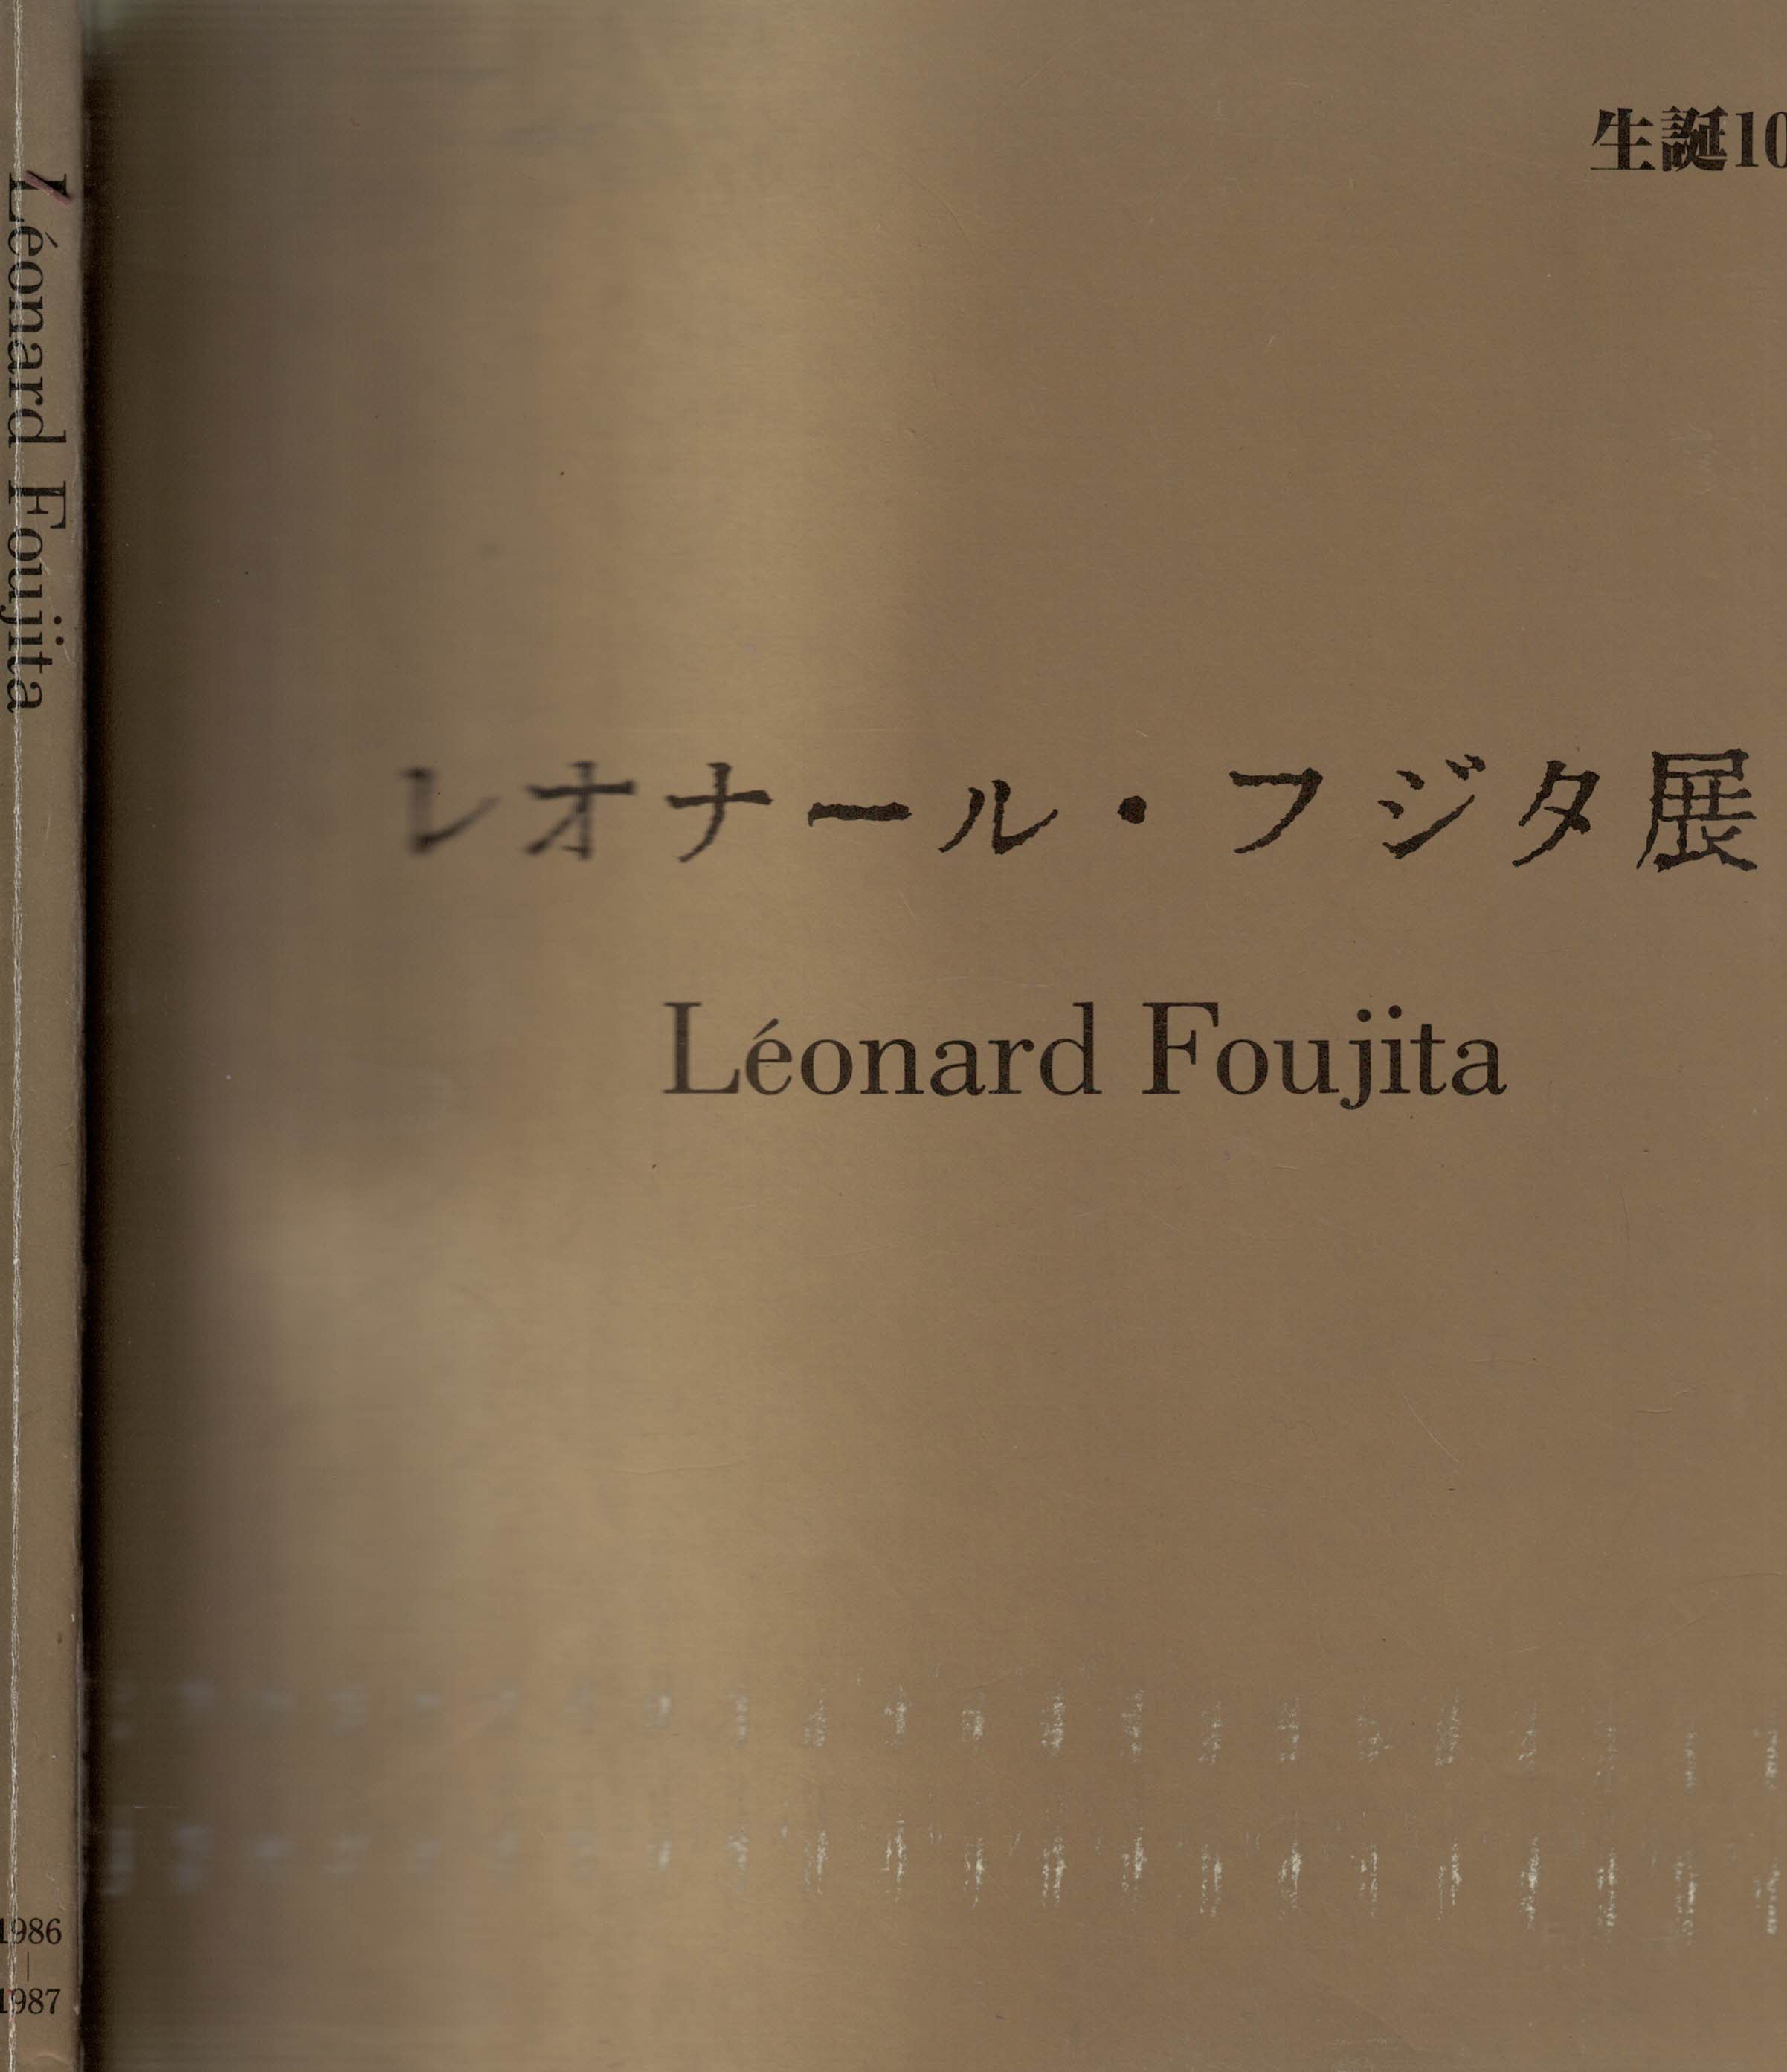 Exposition Lonard Foujita